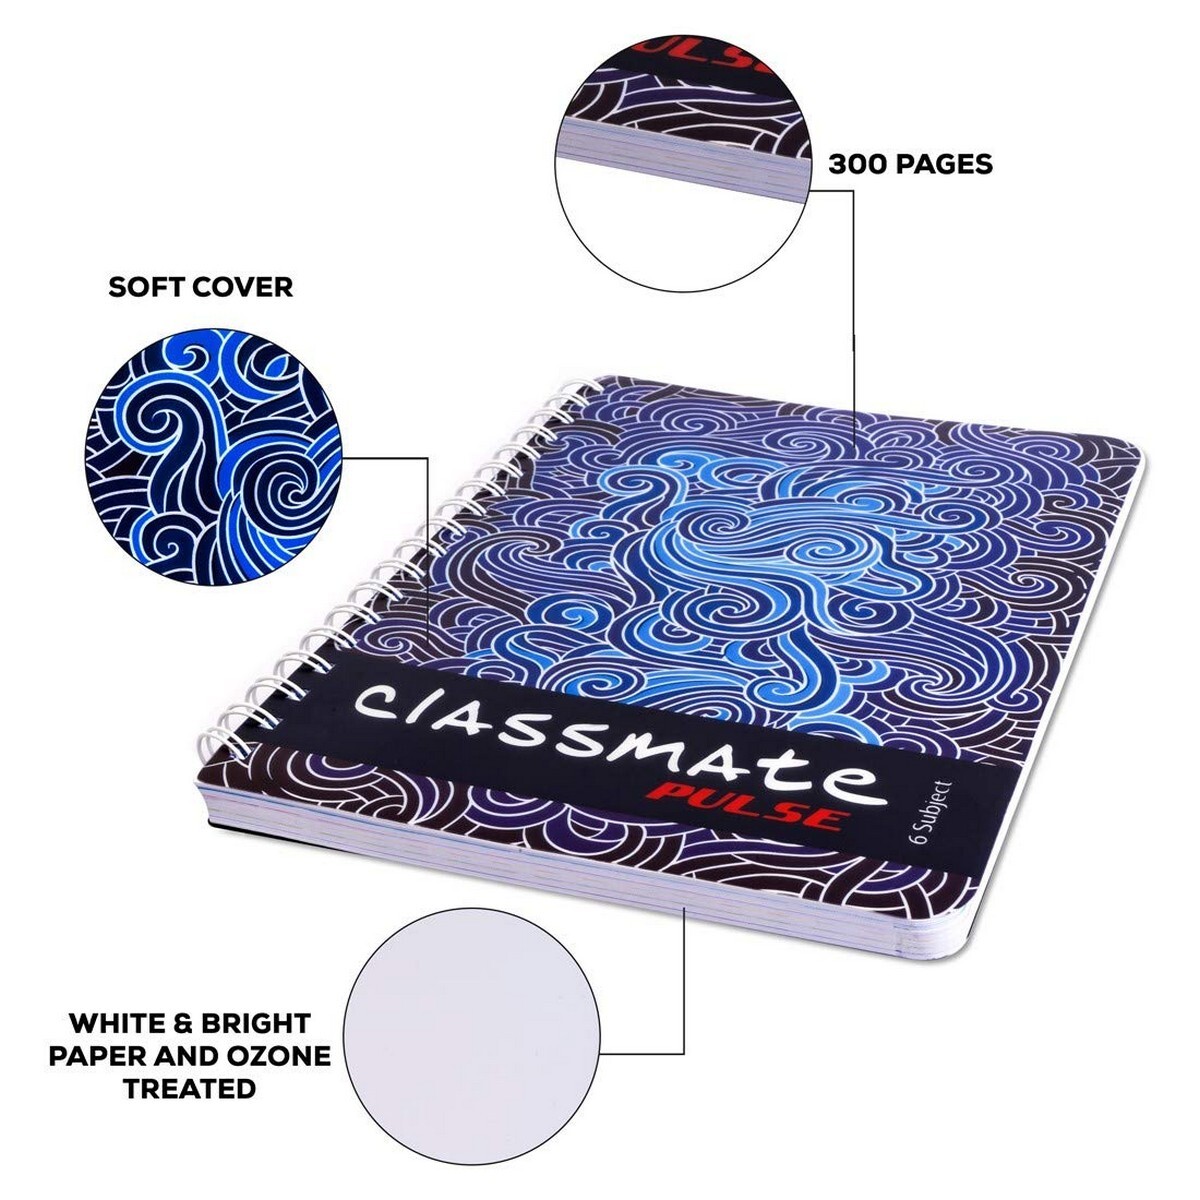 Classmate 6 Subject Notebook Plain 302pg-2100114 Assorted Colour & Design